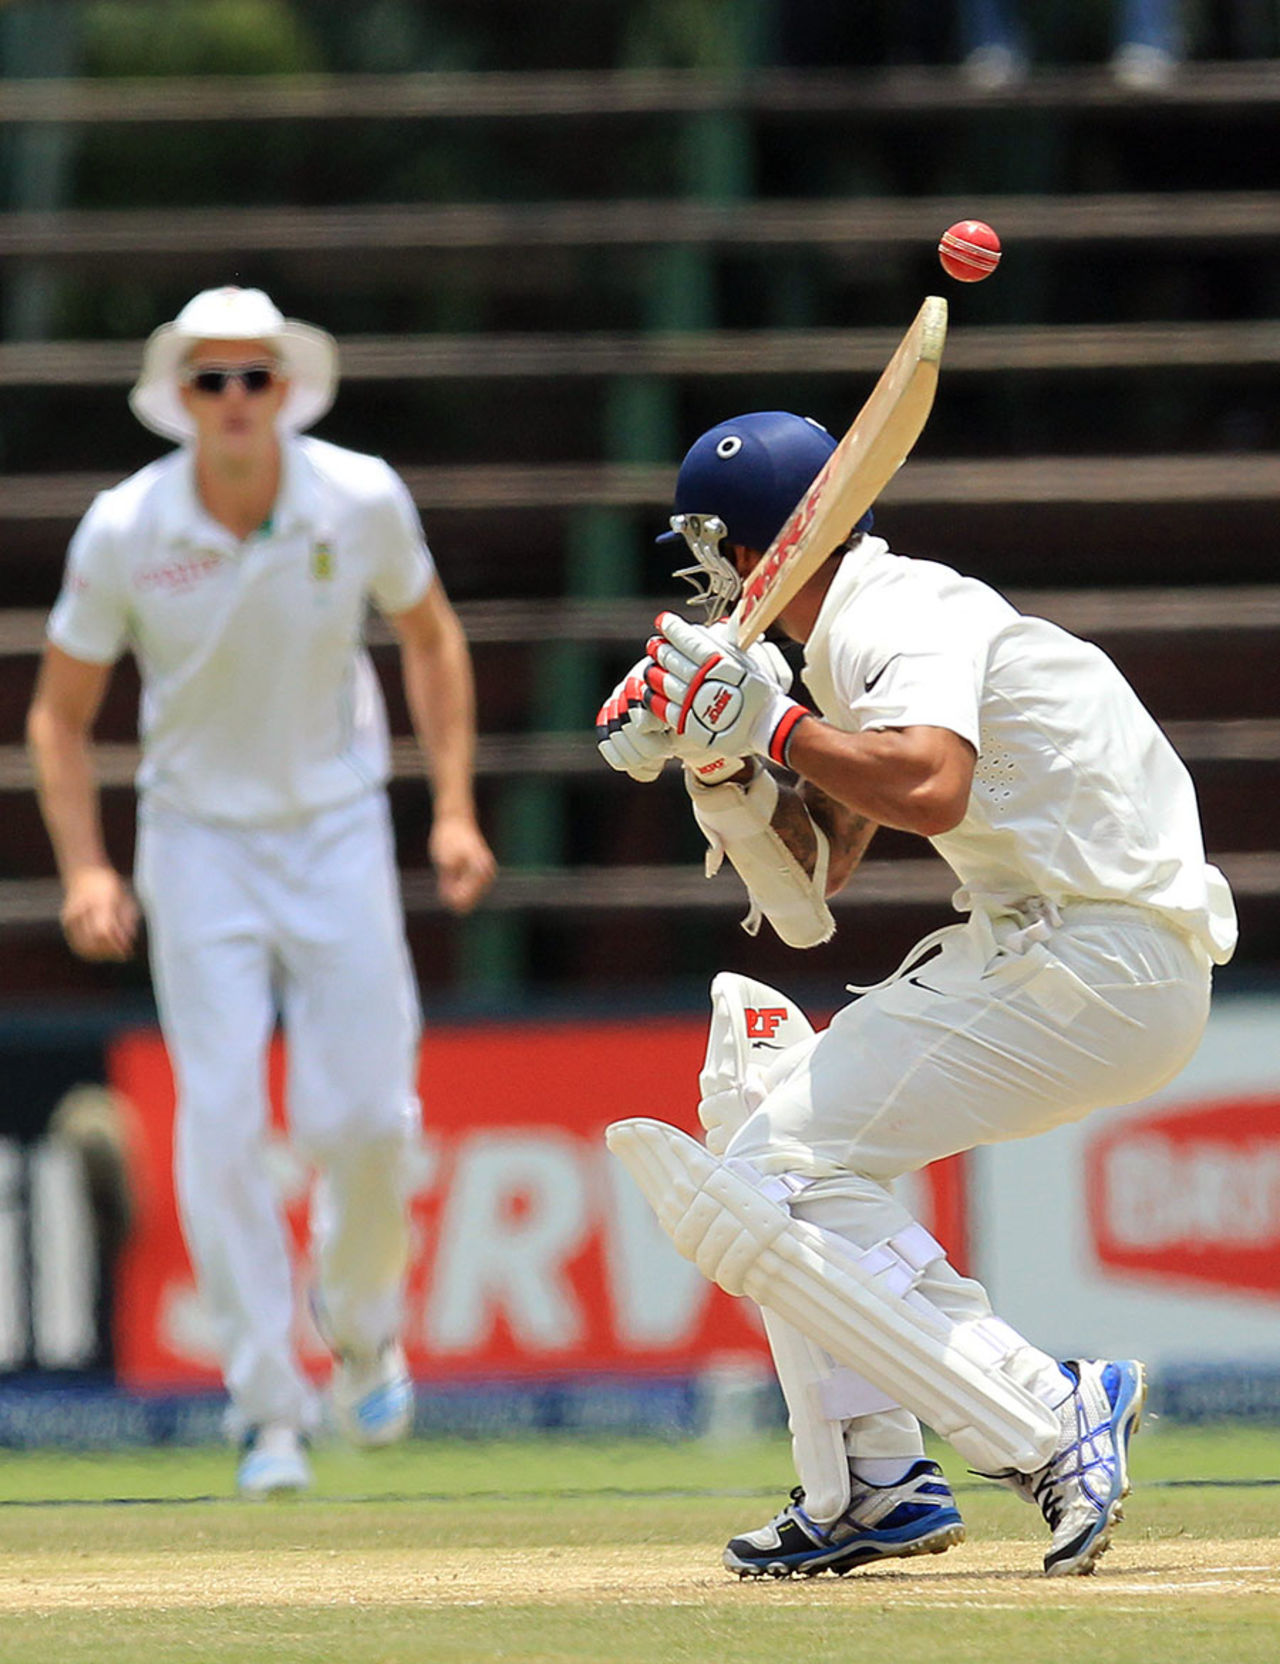 Shikhar Dhawan ducks under a bouncer, South Africa v India, 1st Test, Johannesburg, 3rd day, December 20, 2013